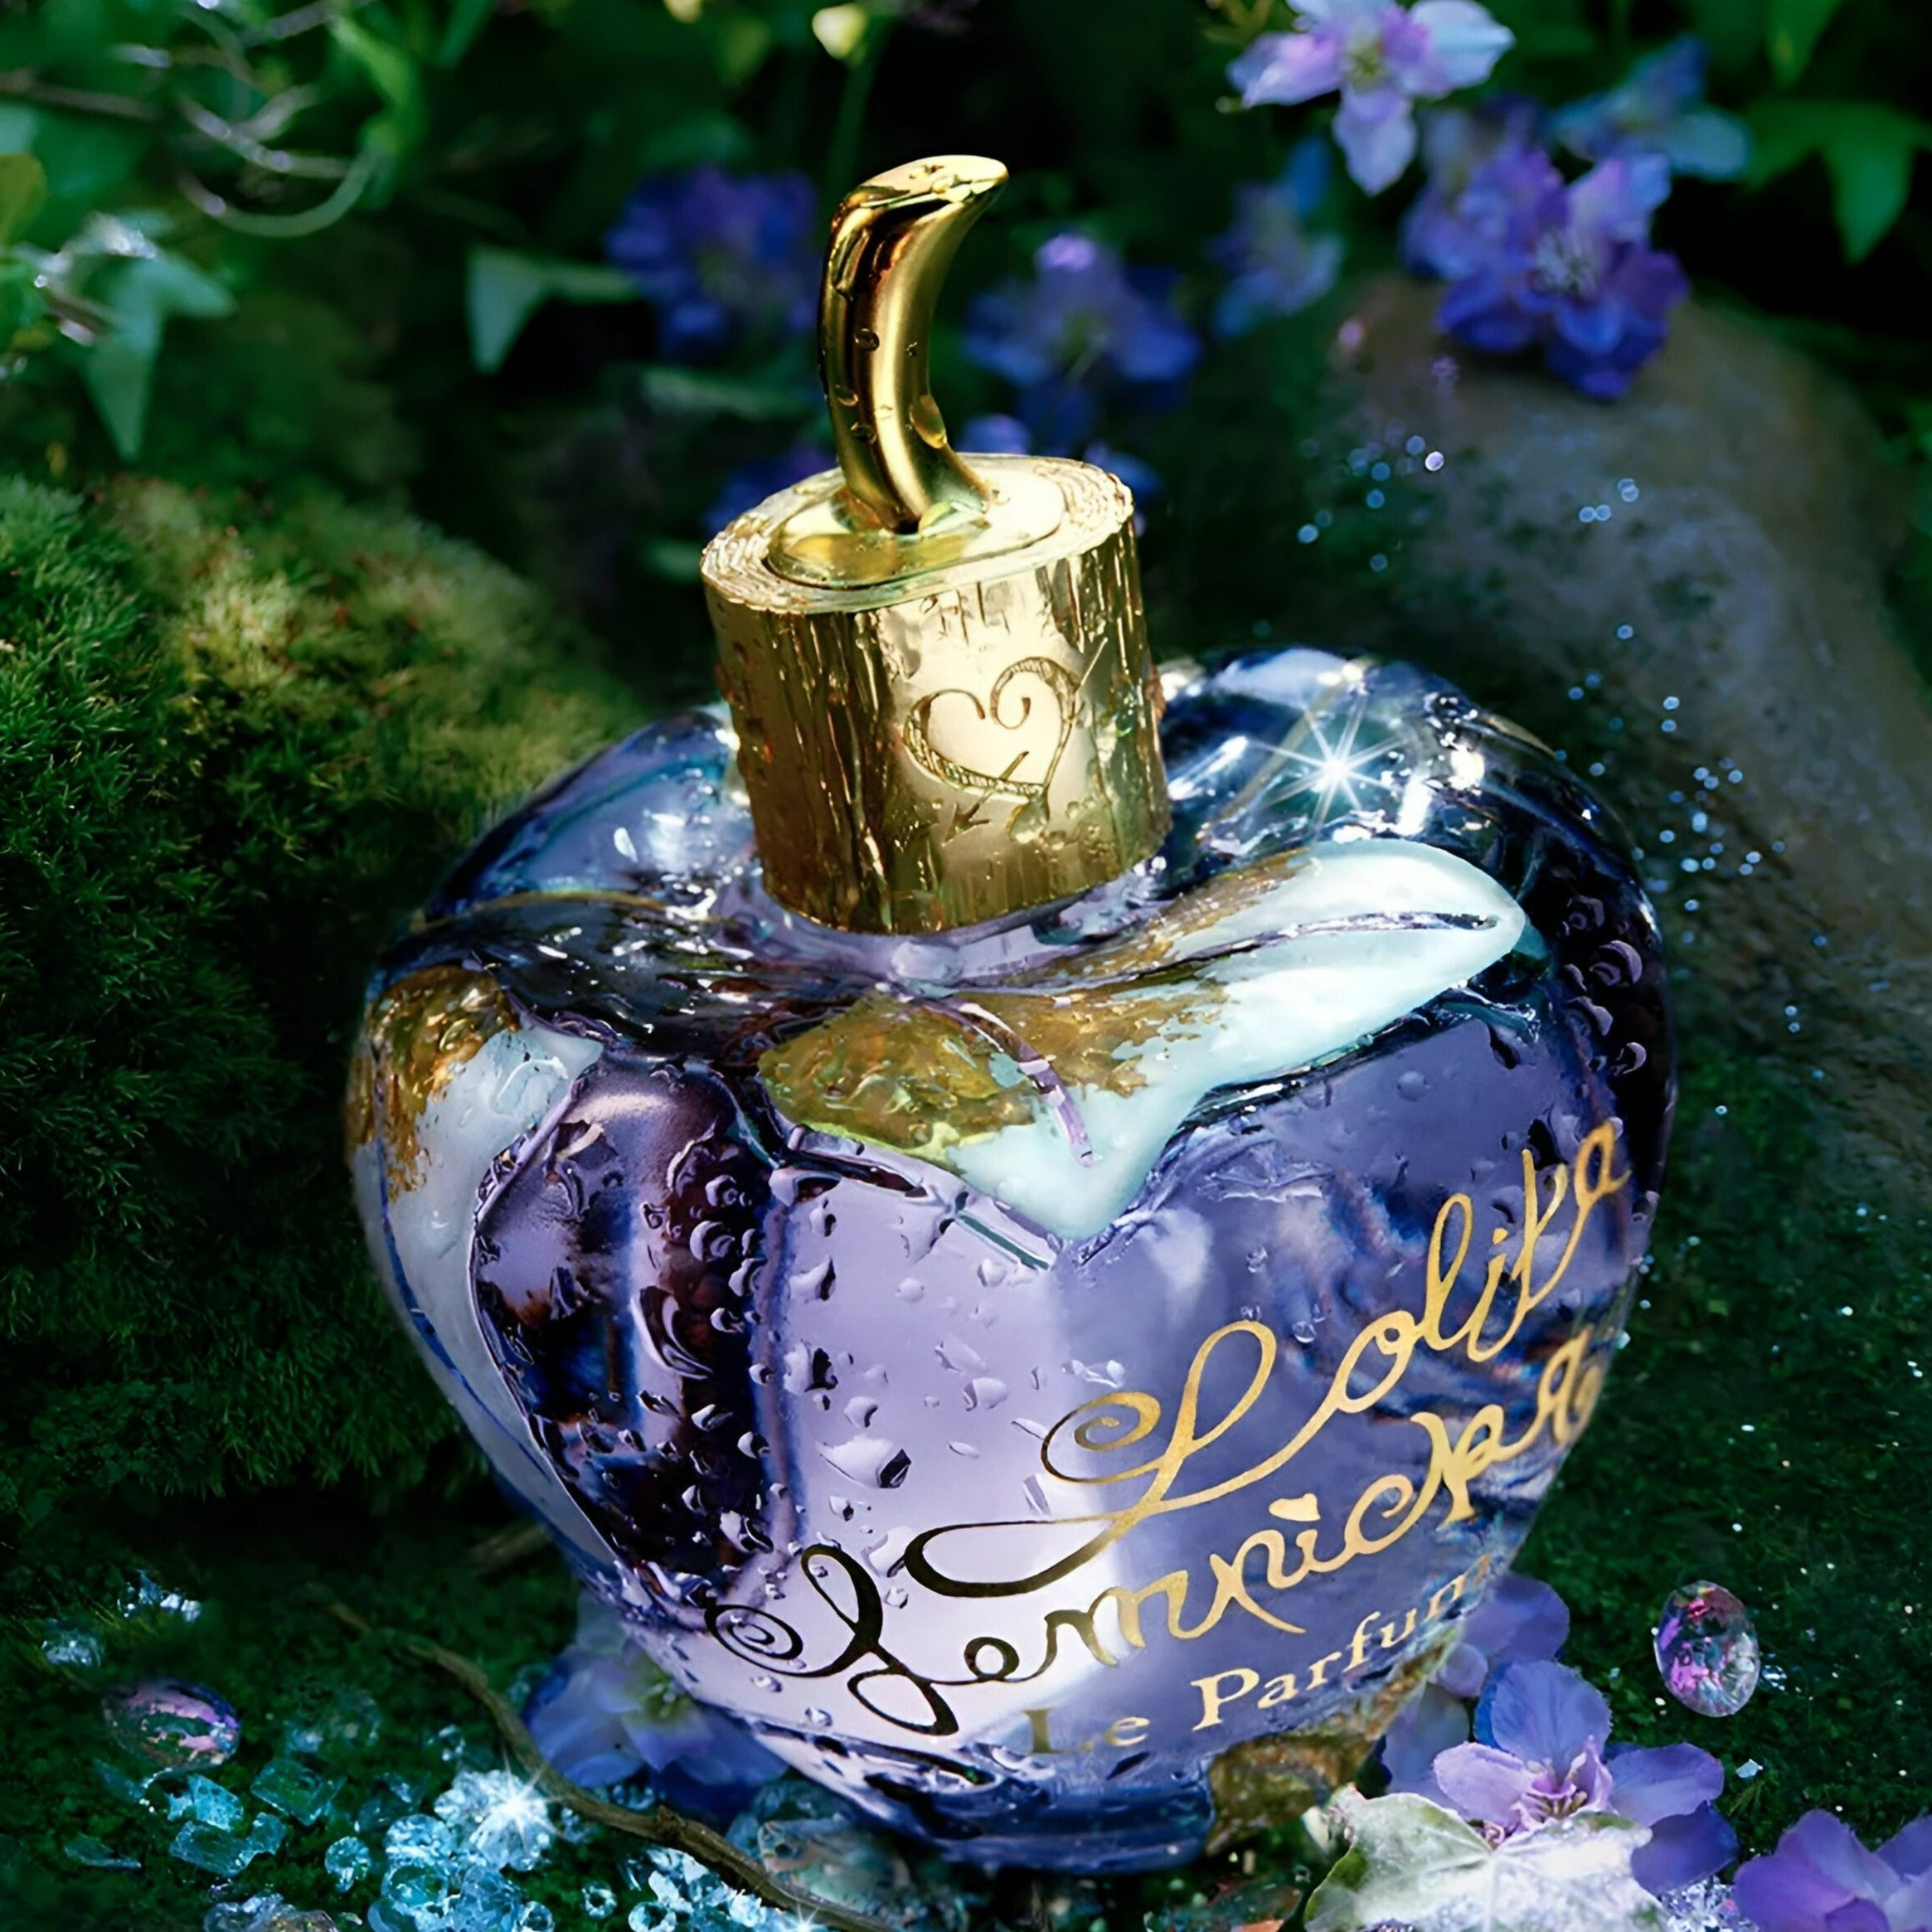 Lolita Lempicka Le Parfum EDP Perfumed Soap Travel Set | My Perfume Shop Australia